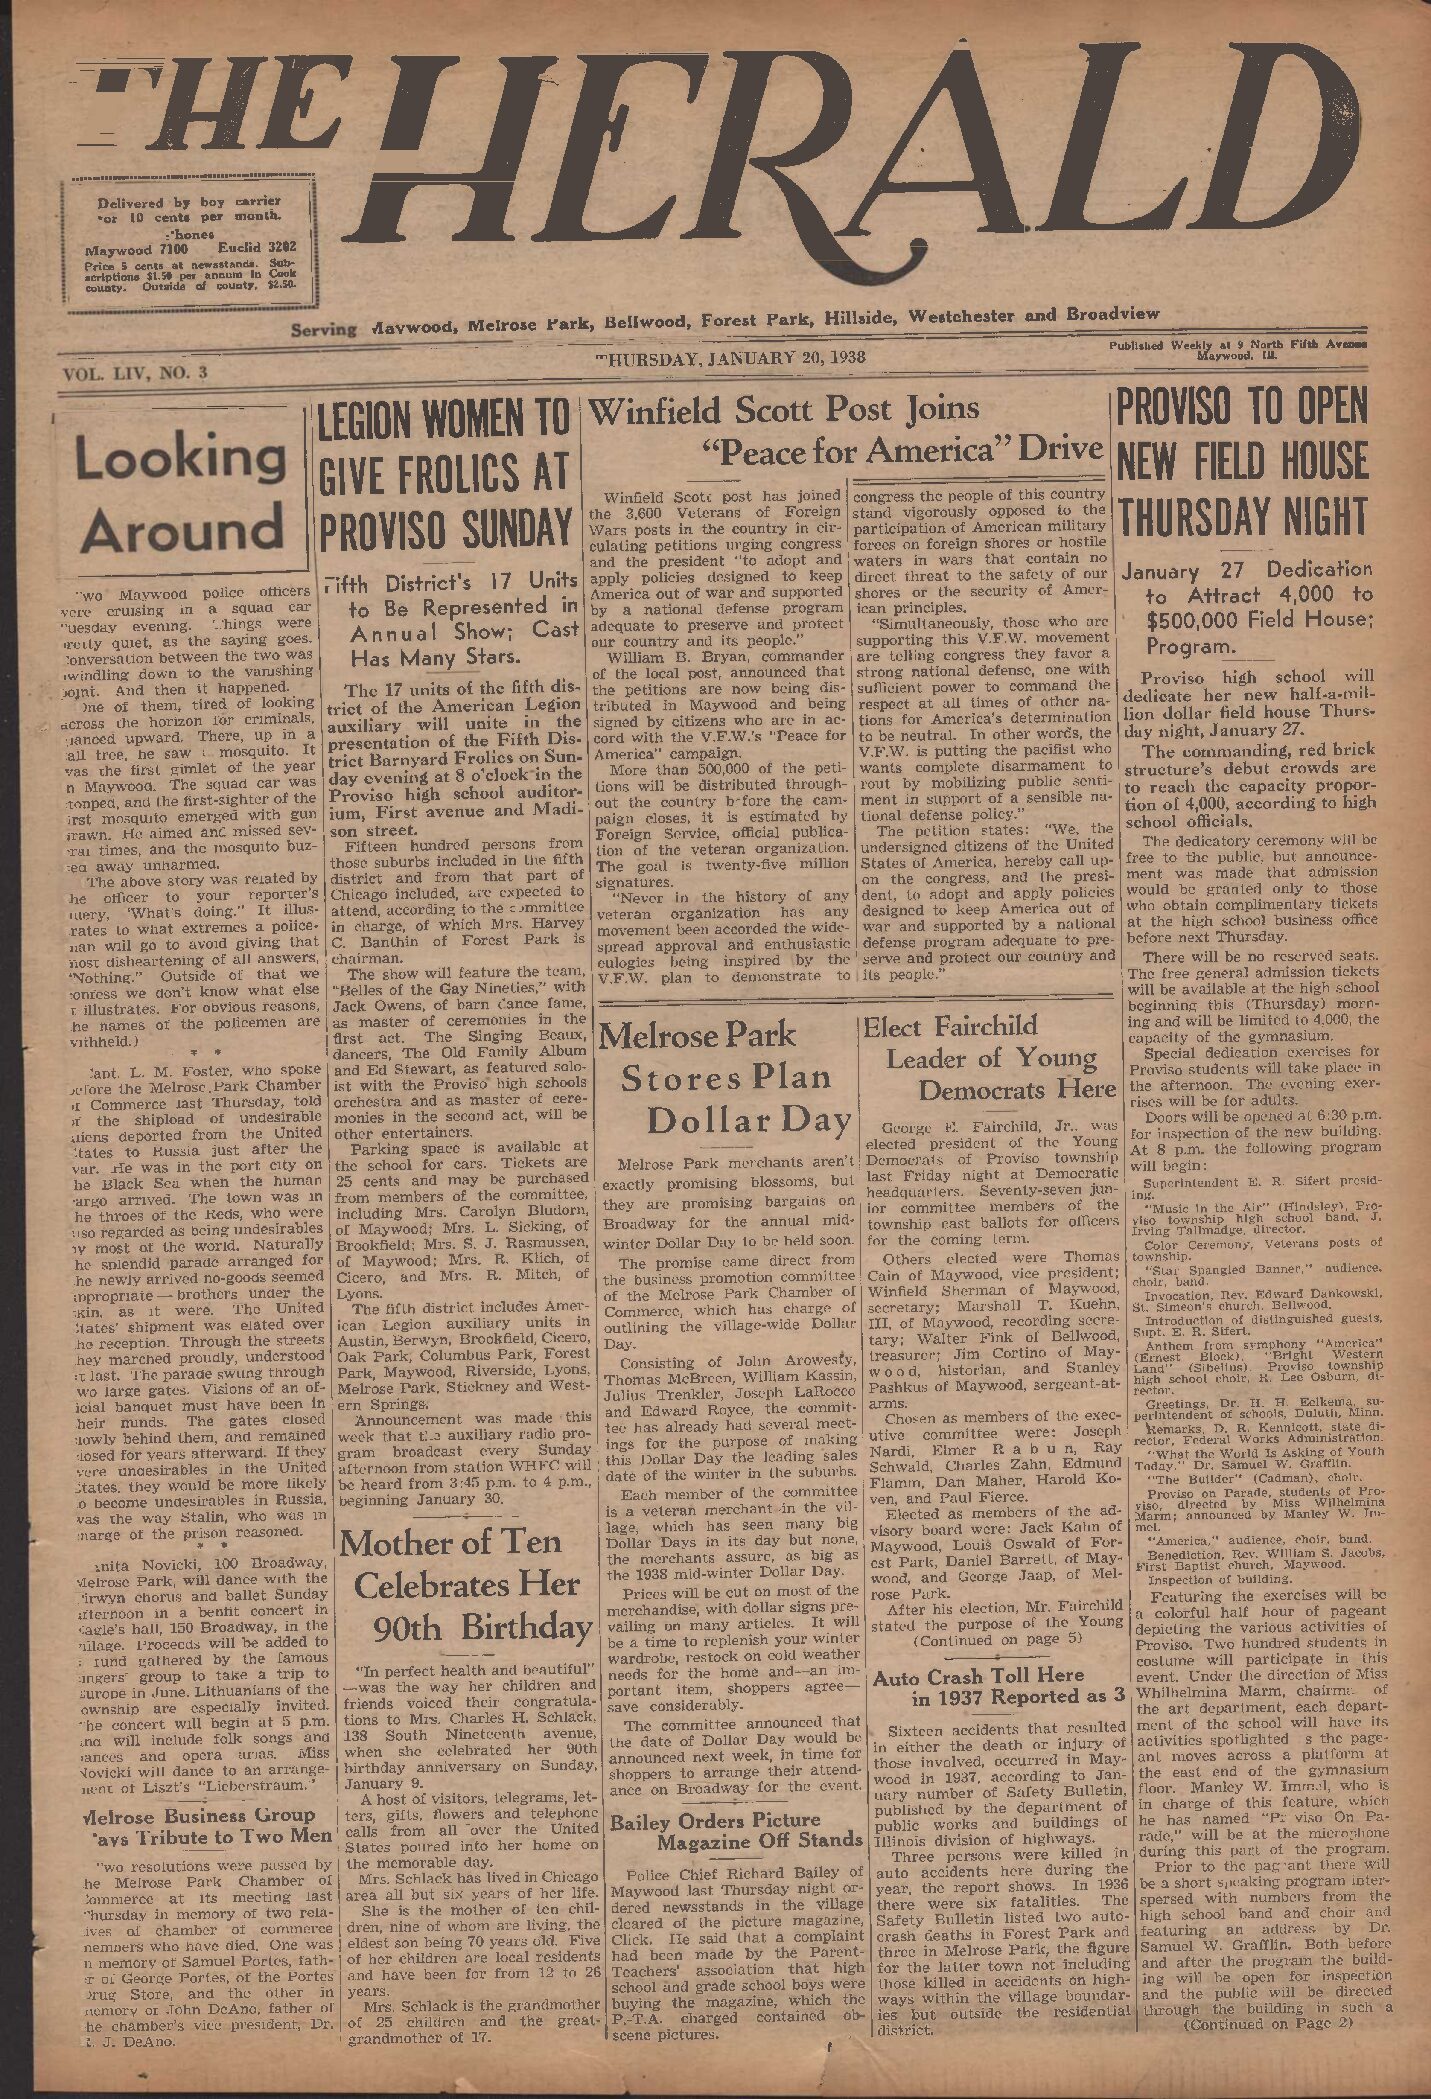 The Herald – 19380120